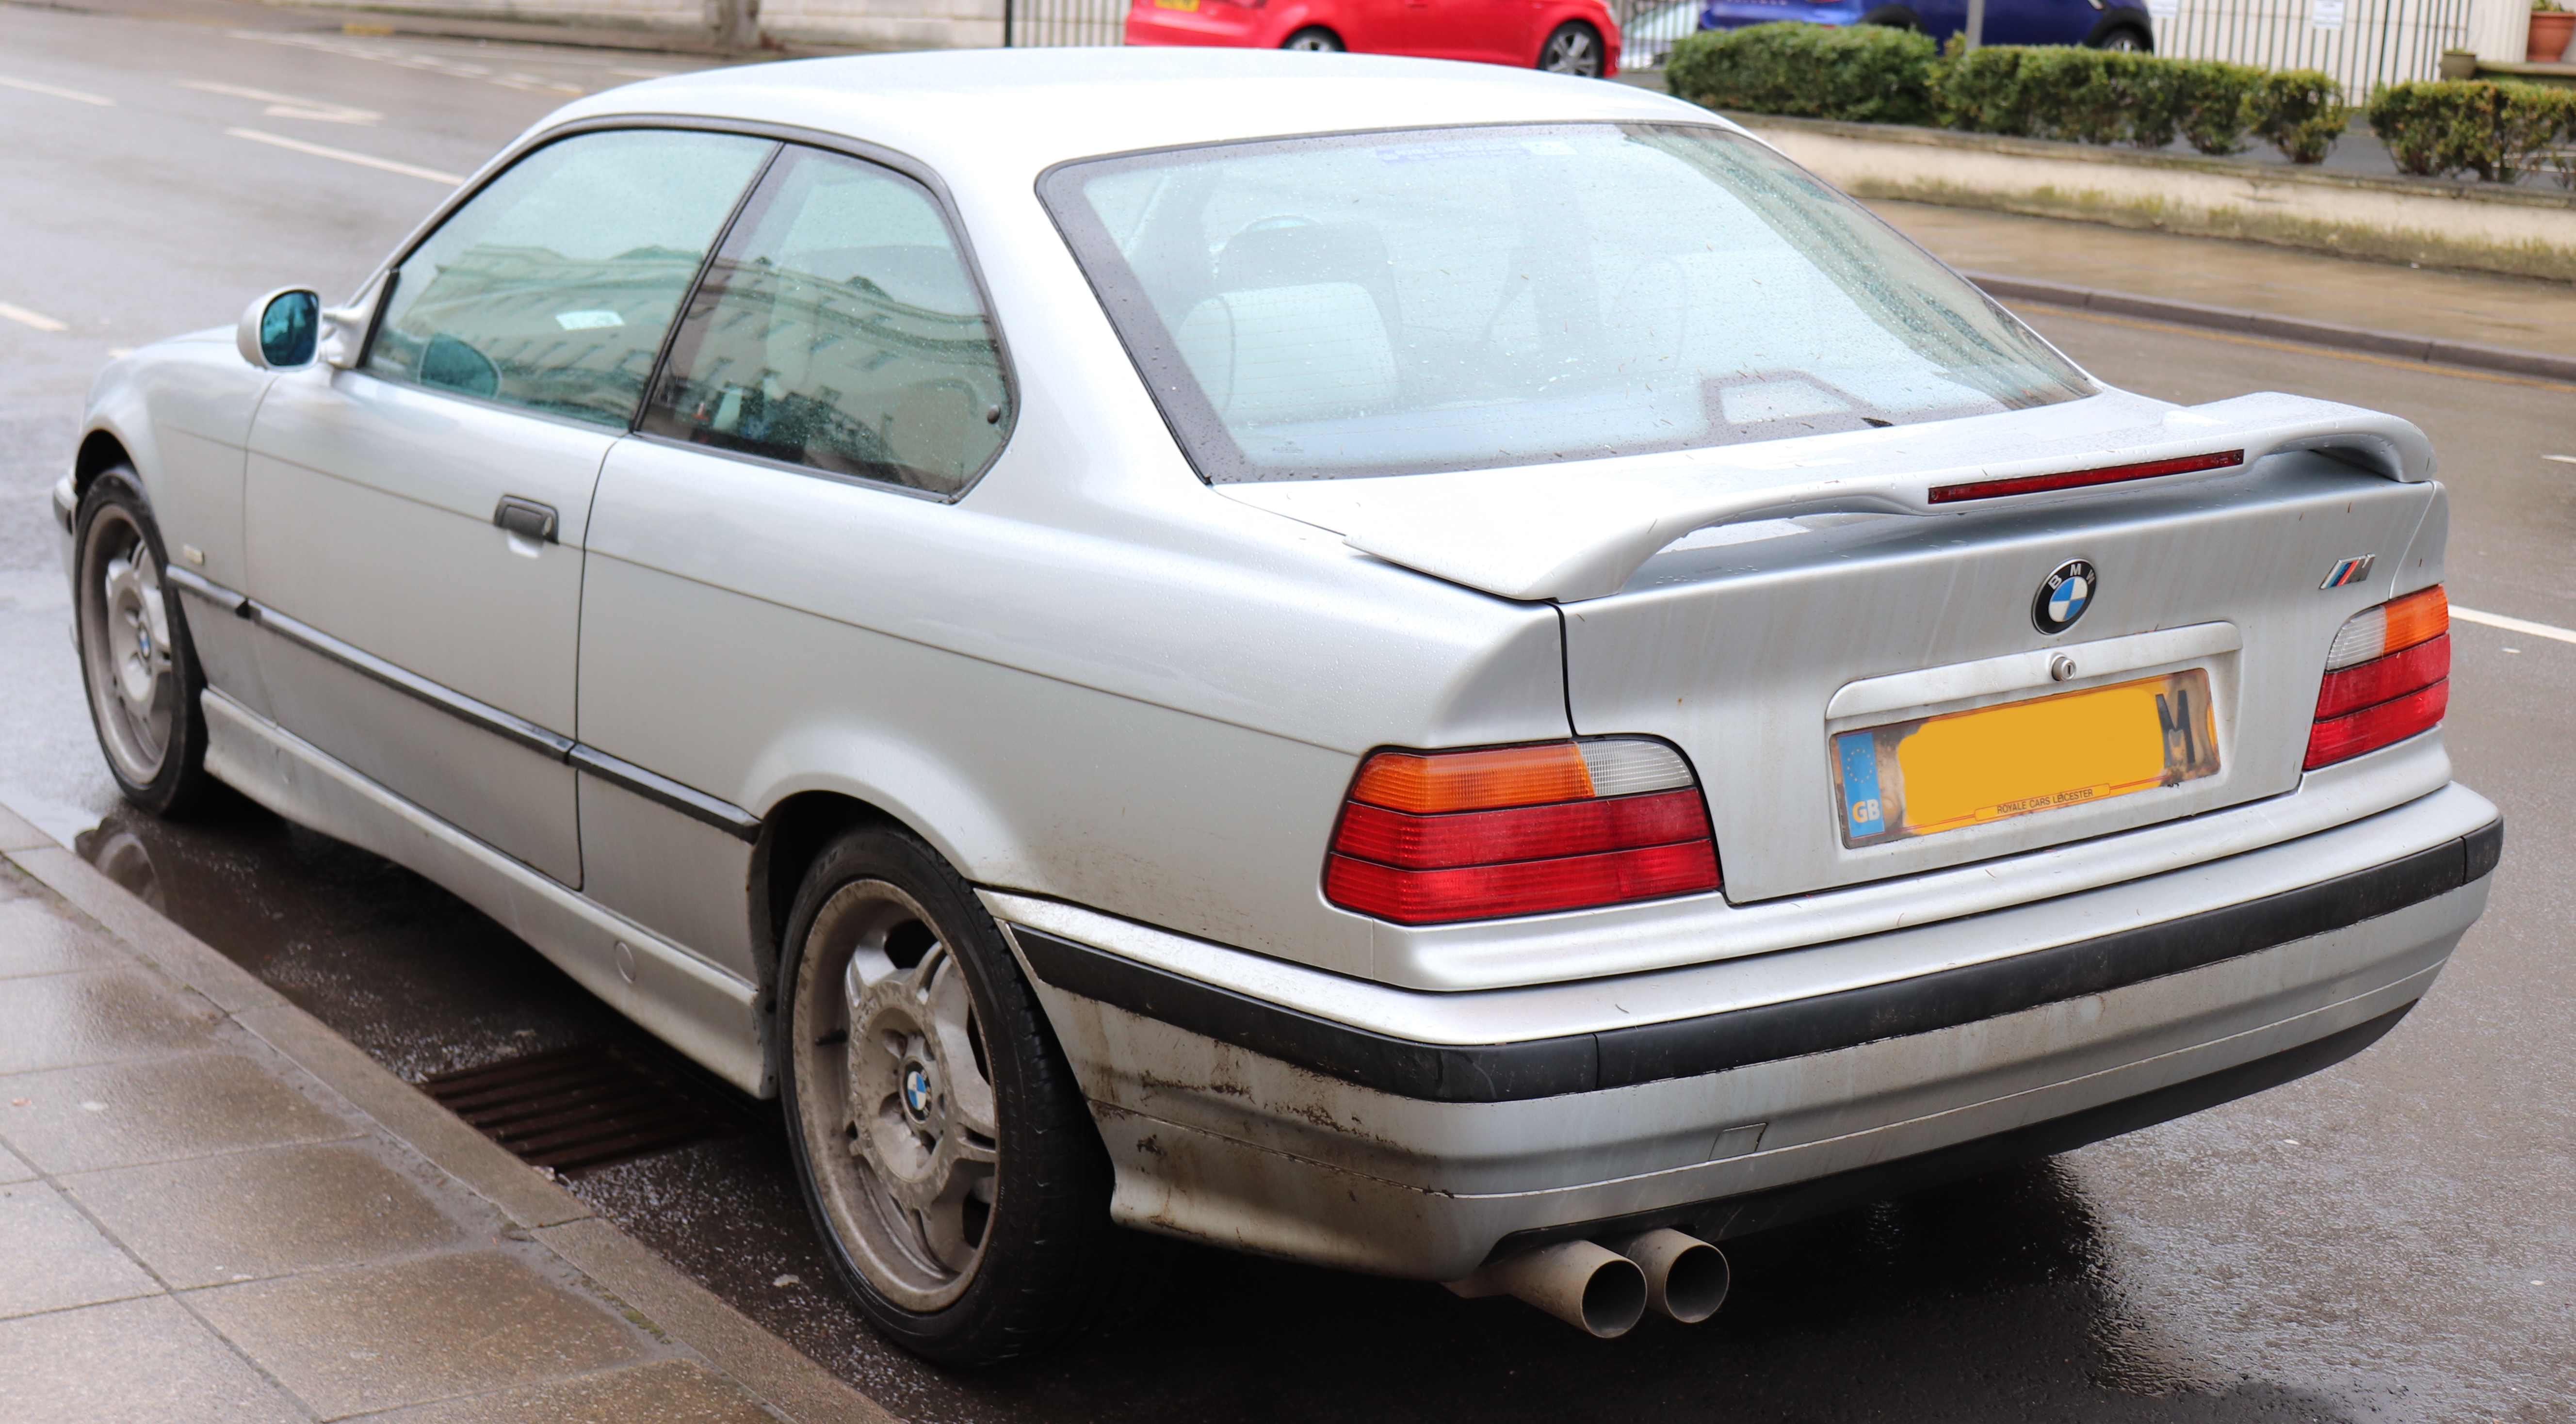 File:1998 BMW 323i 2.5 Rear.jpg - Wikimedia Commons